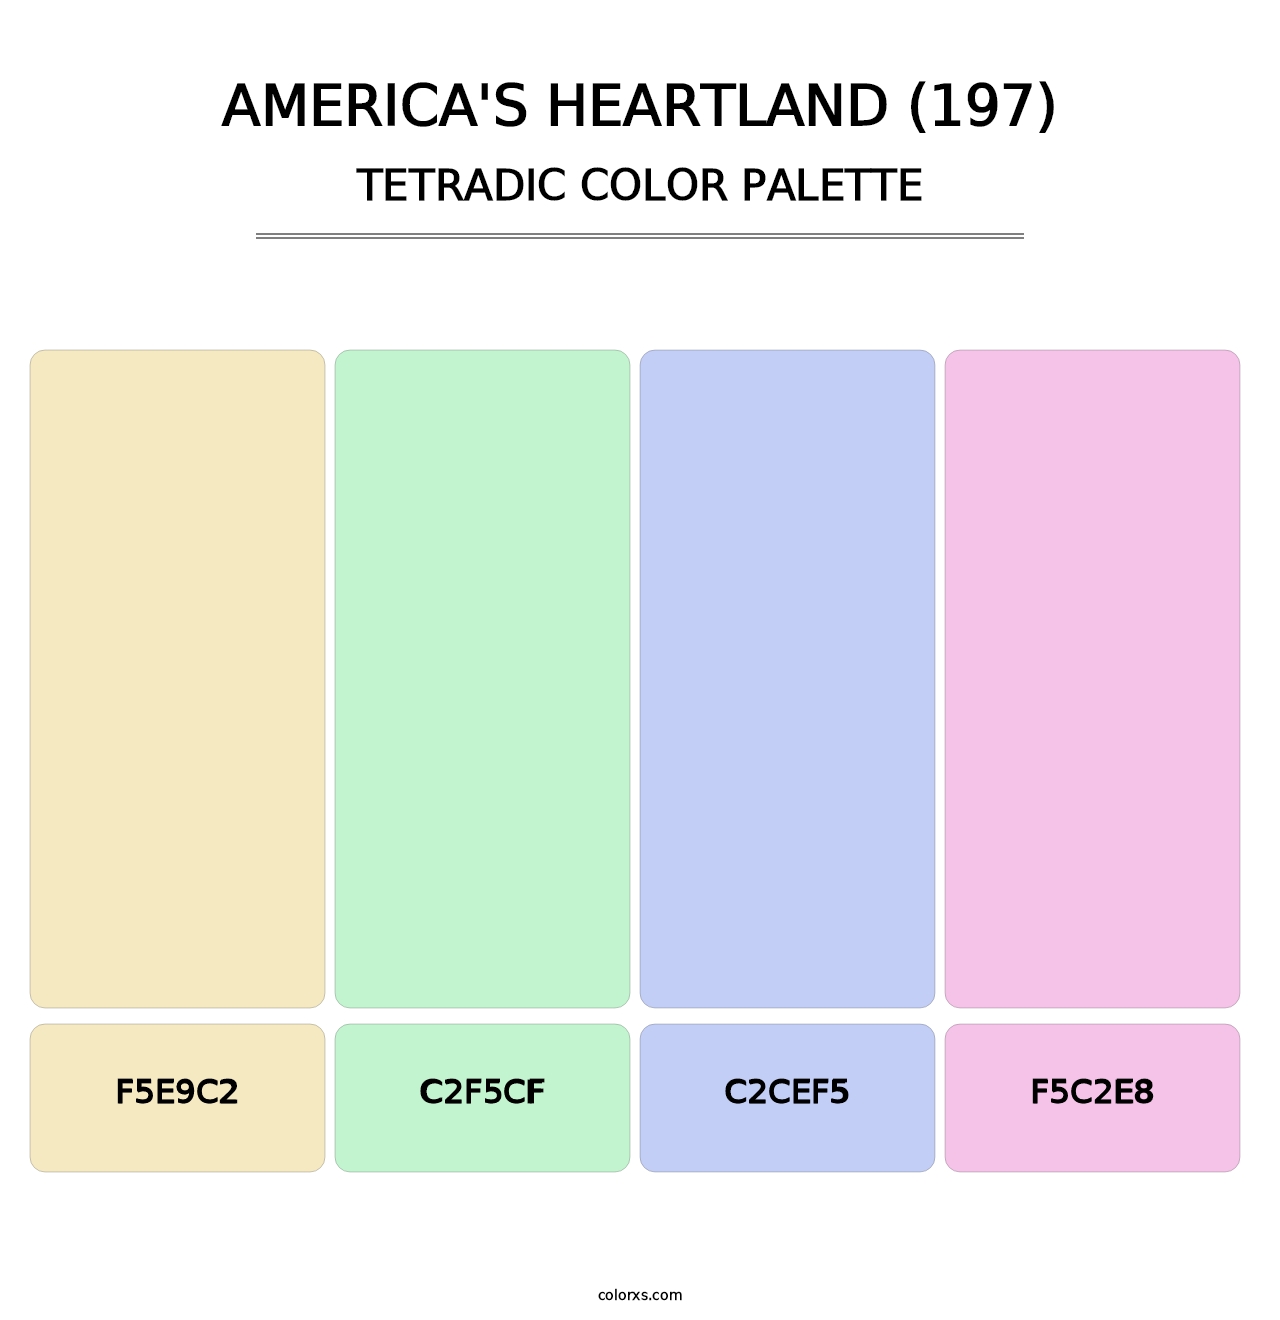 America's Heartland (197) - Tetradic Color Palette